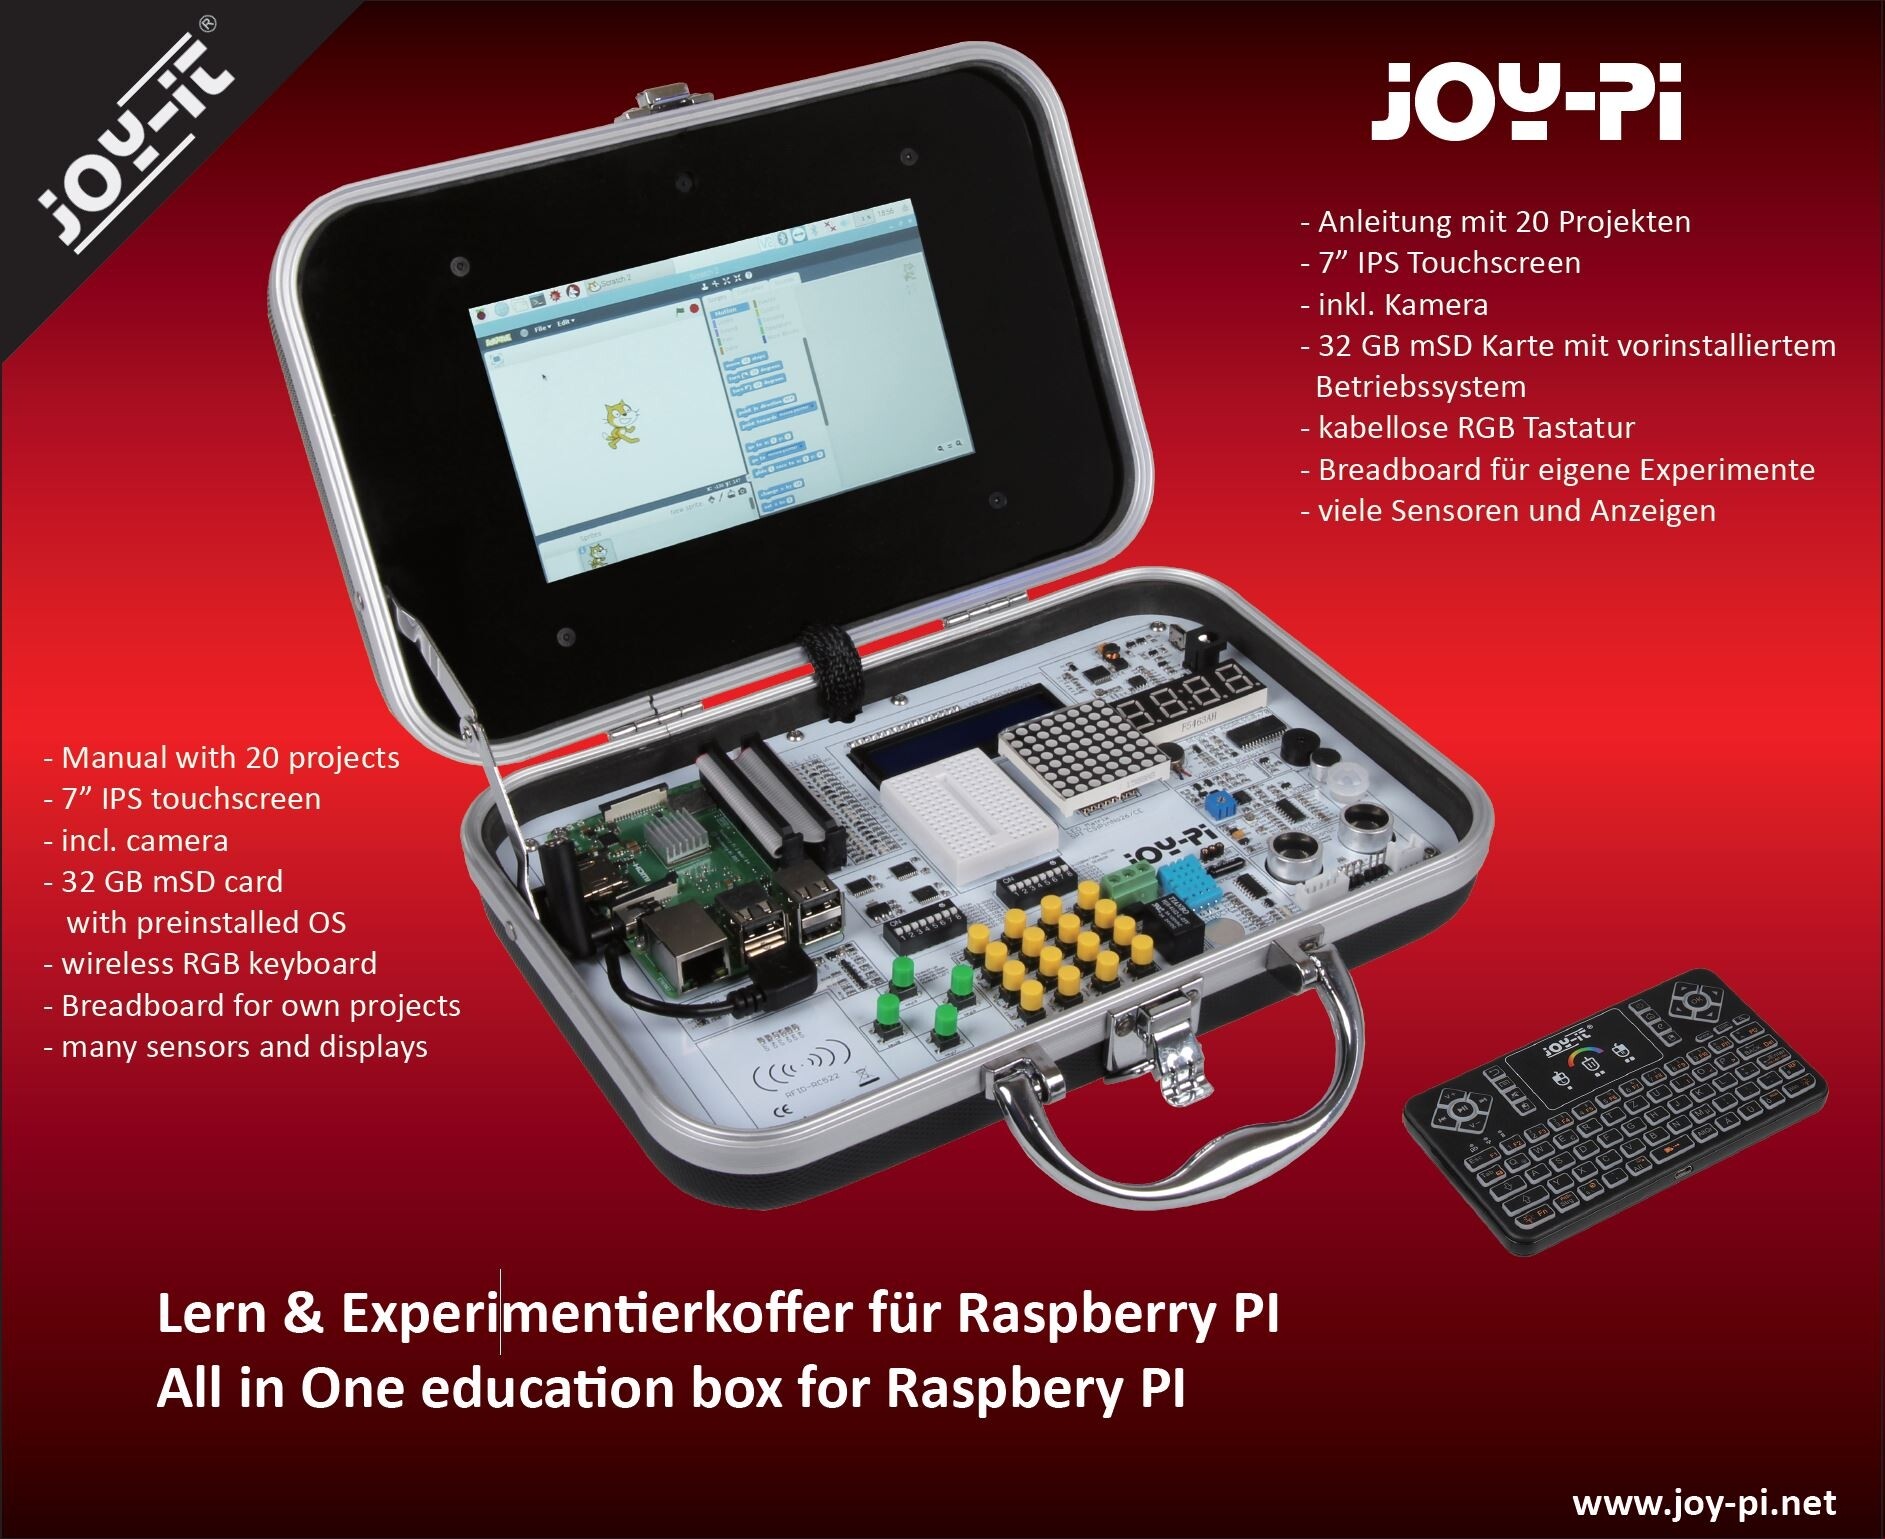 JoyPi - Experiment und Education Koffer